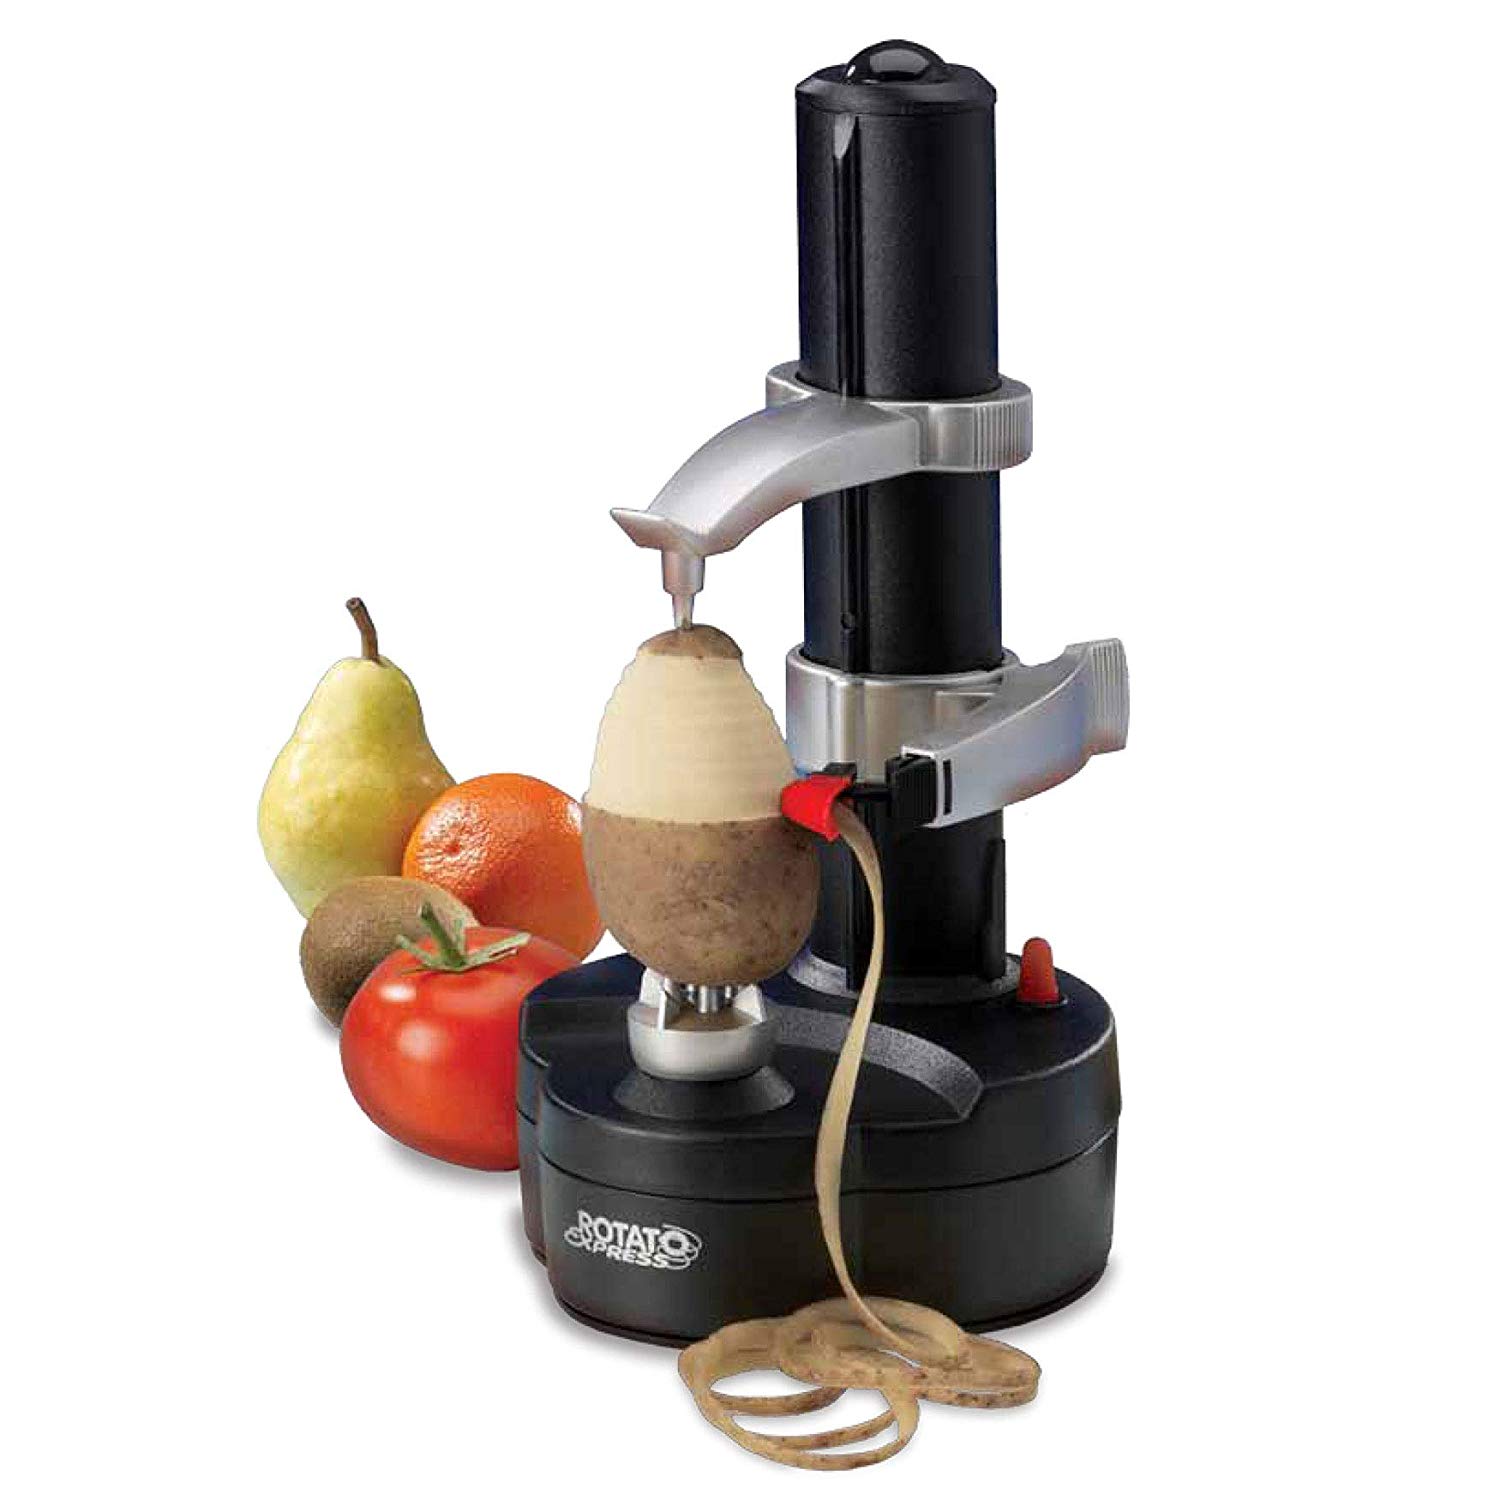 Details about   Multifunctional Household Electric Fruit Potato Peeler Peeling Machine Kitc Home 